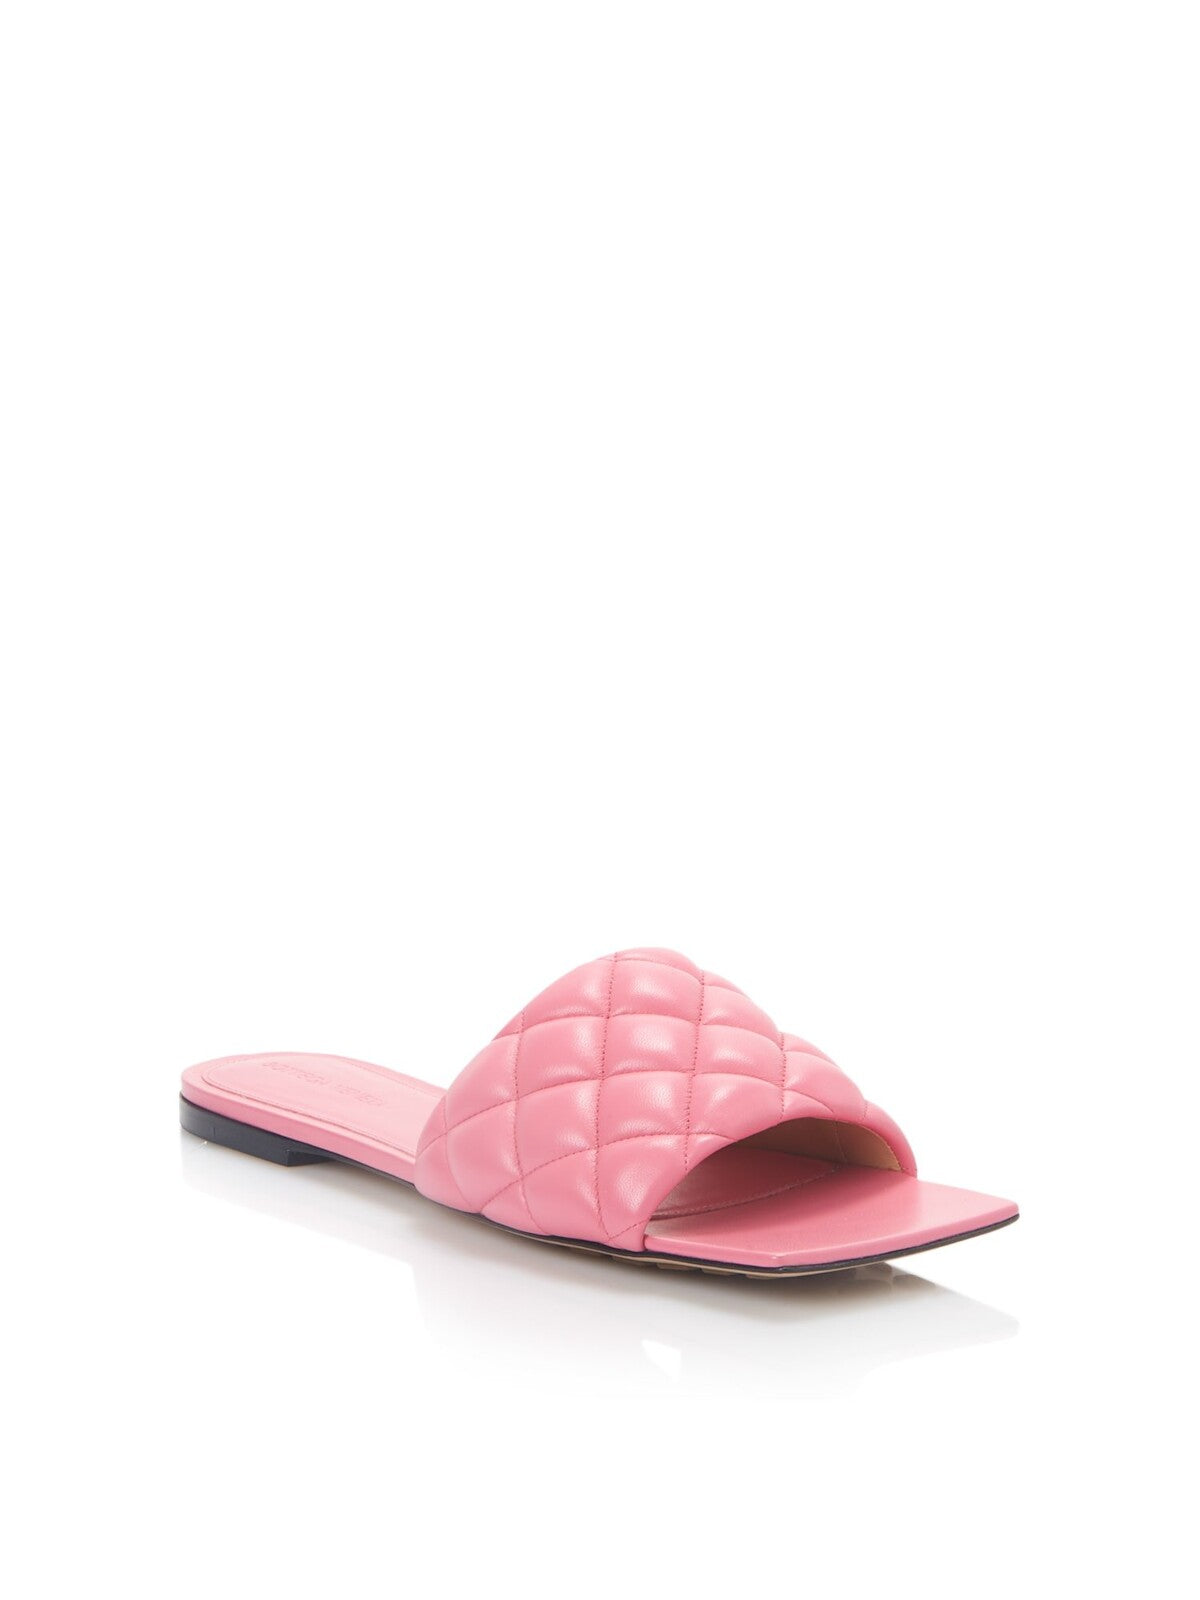 BOTTEGA VENETA Womens Pink Quilted Square Toe Slip On Leather Flats Shoes 41